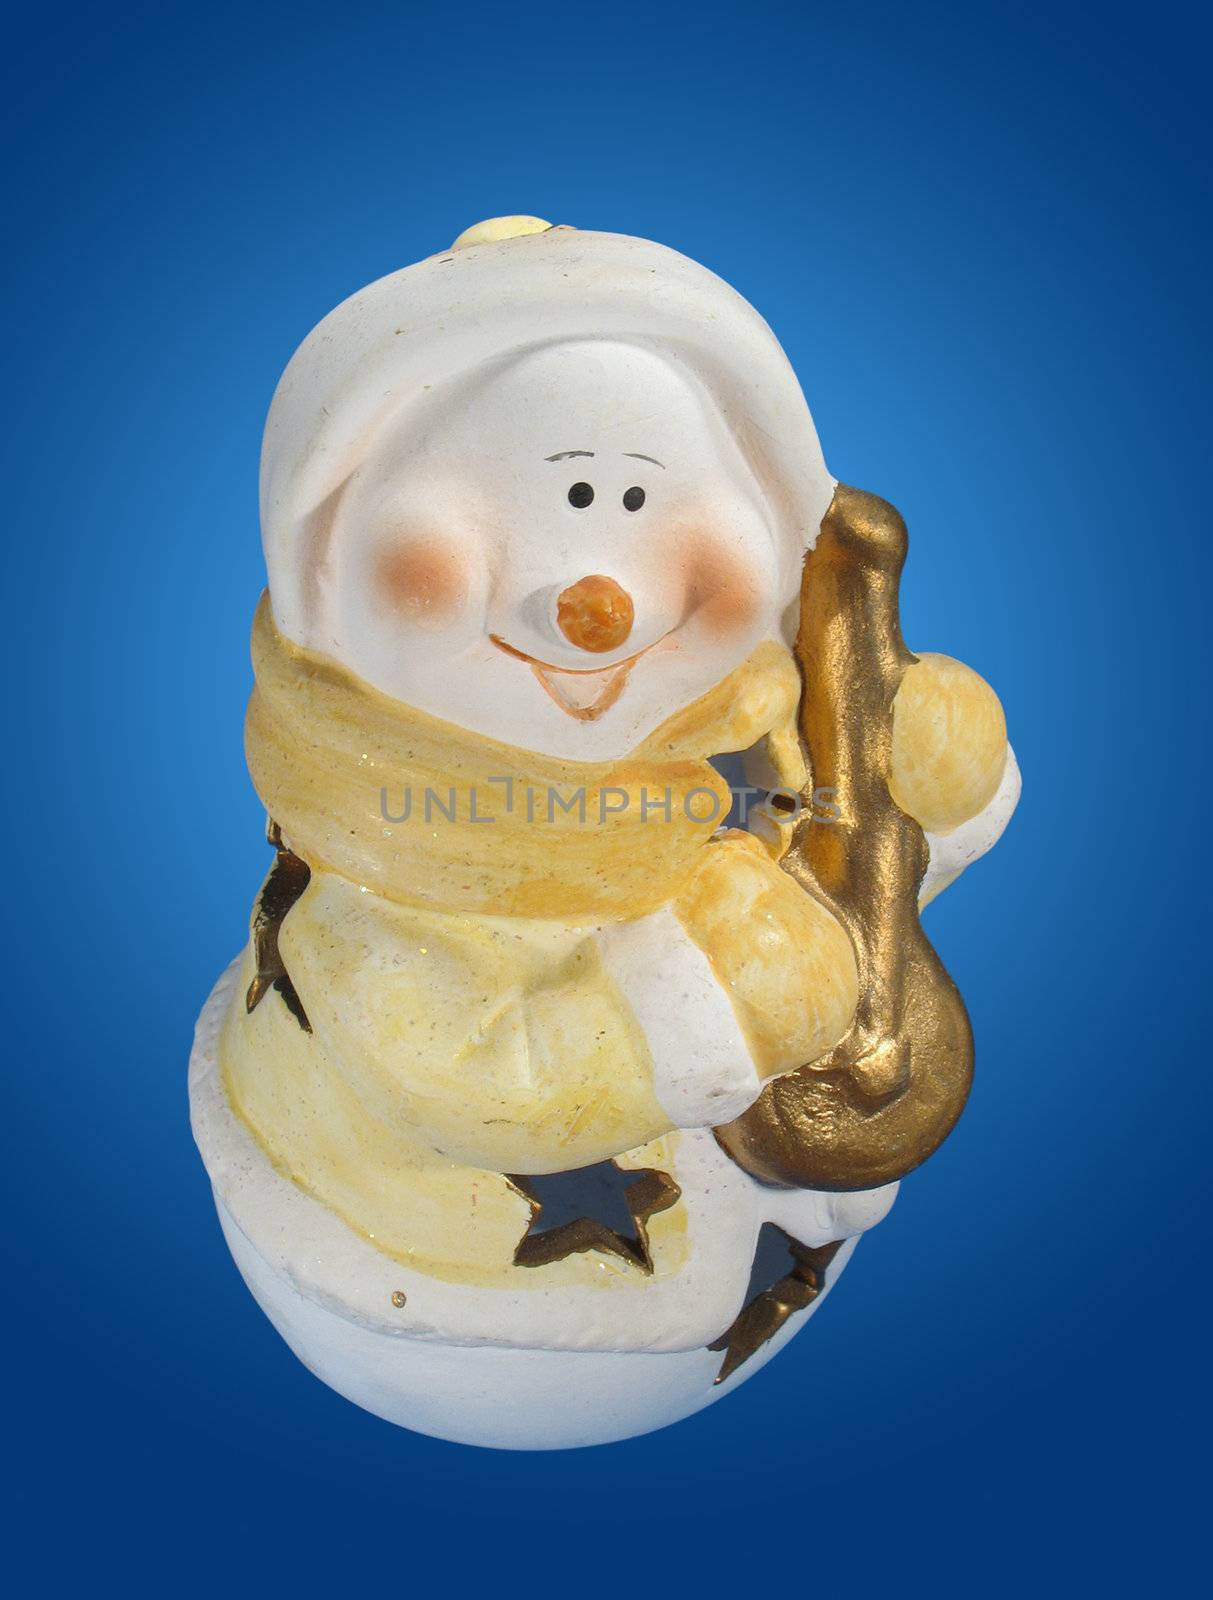 Snowman with lute by Kriblikrabli